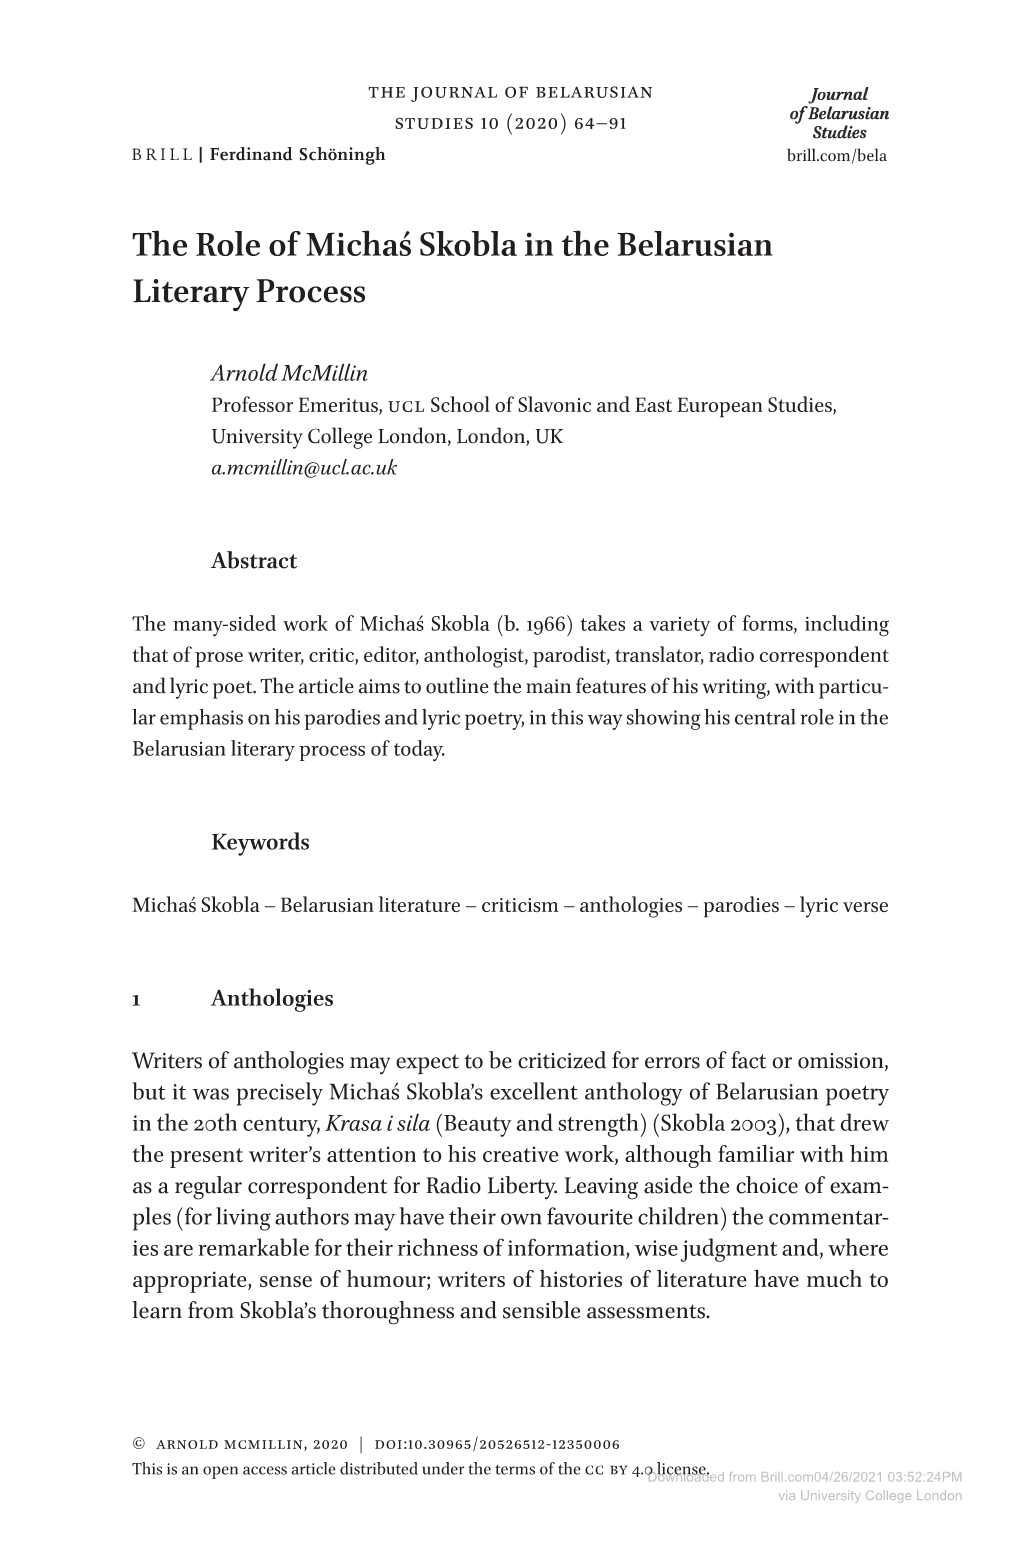 The Role of Michaś Skobla in the Belarusian Literary Process